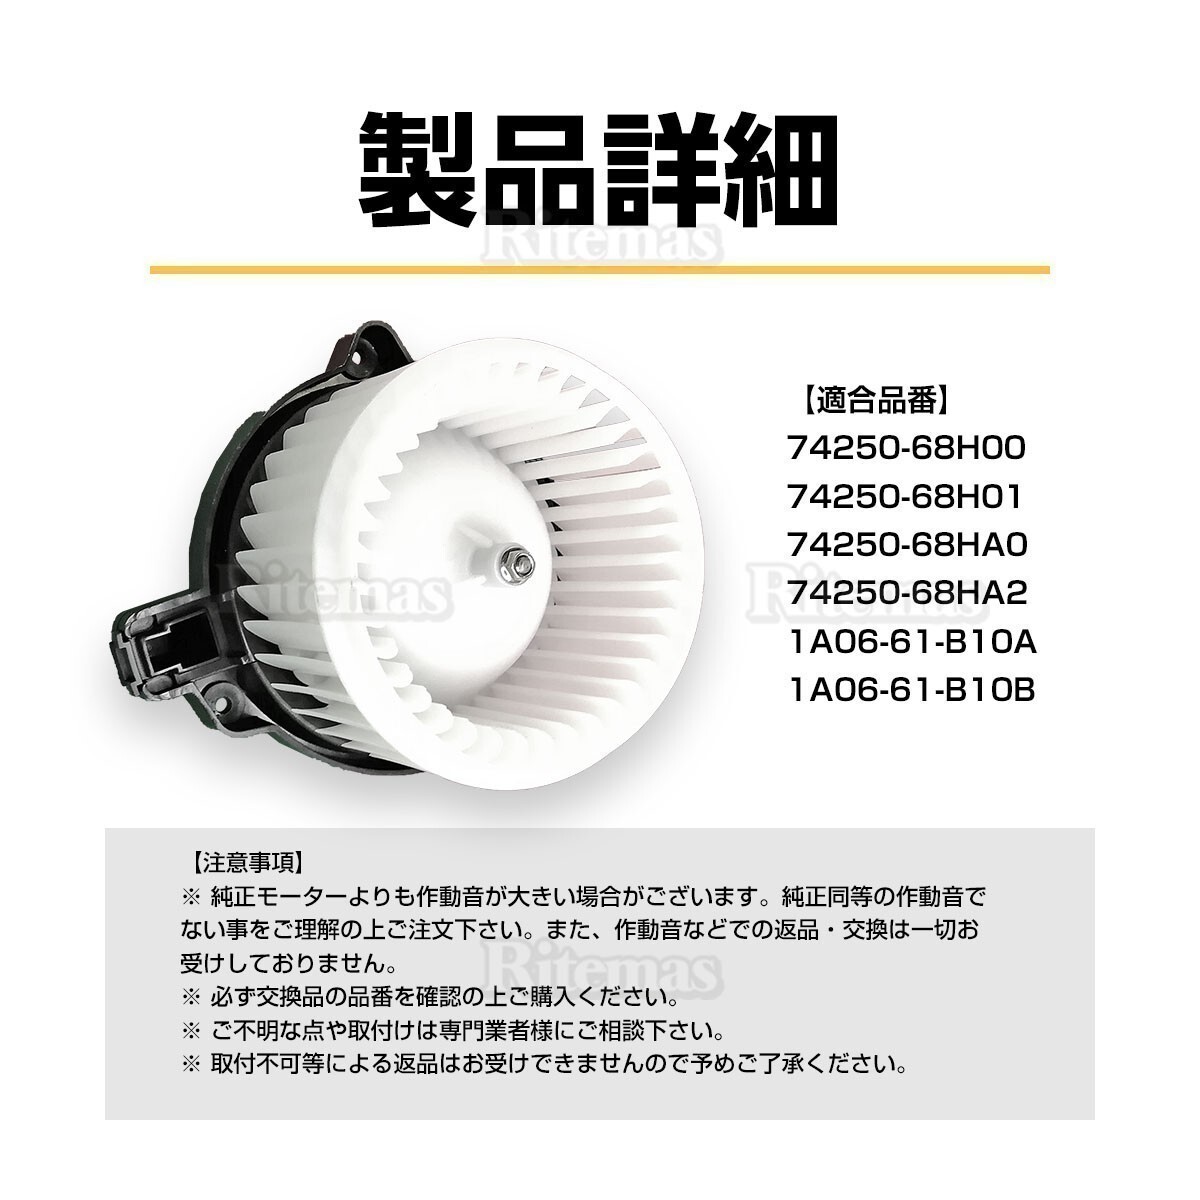  blower motor blower fan Every / Every DA64V/DA64W 74250-68H00 heater motor blower motor blower fan blower fan 